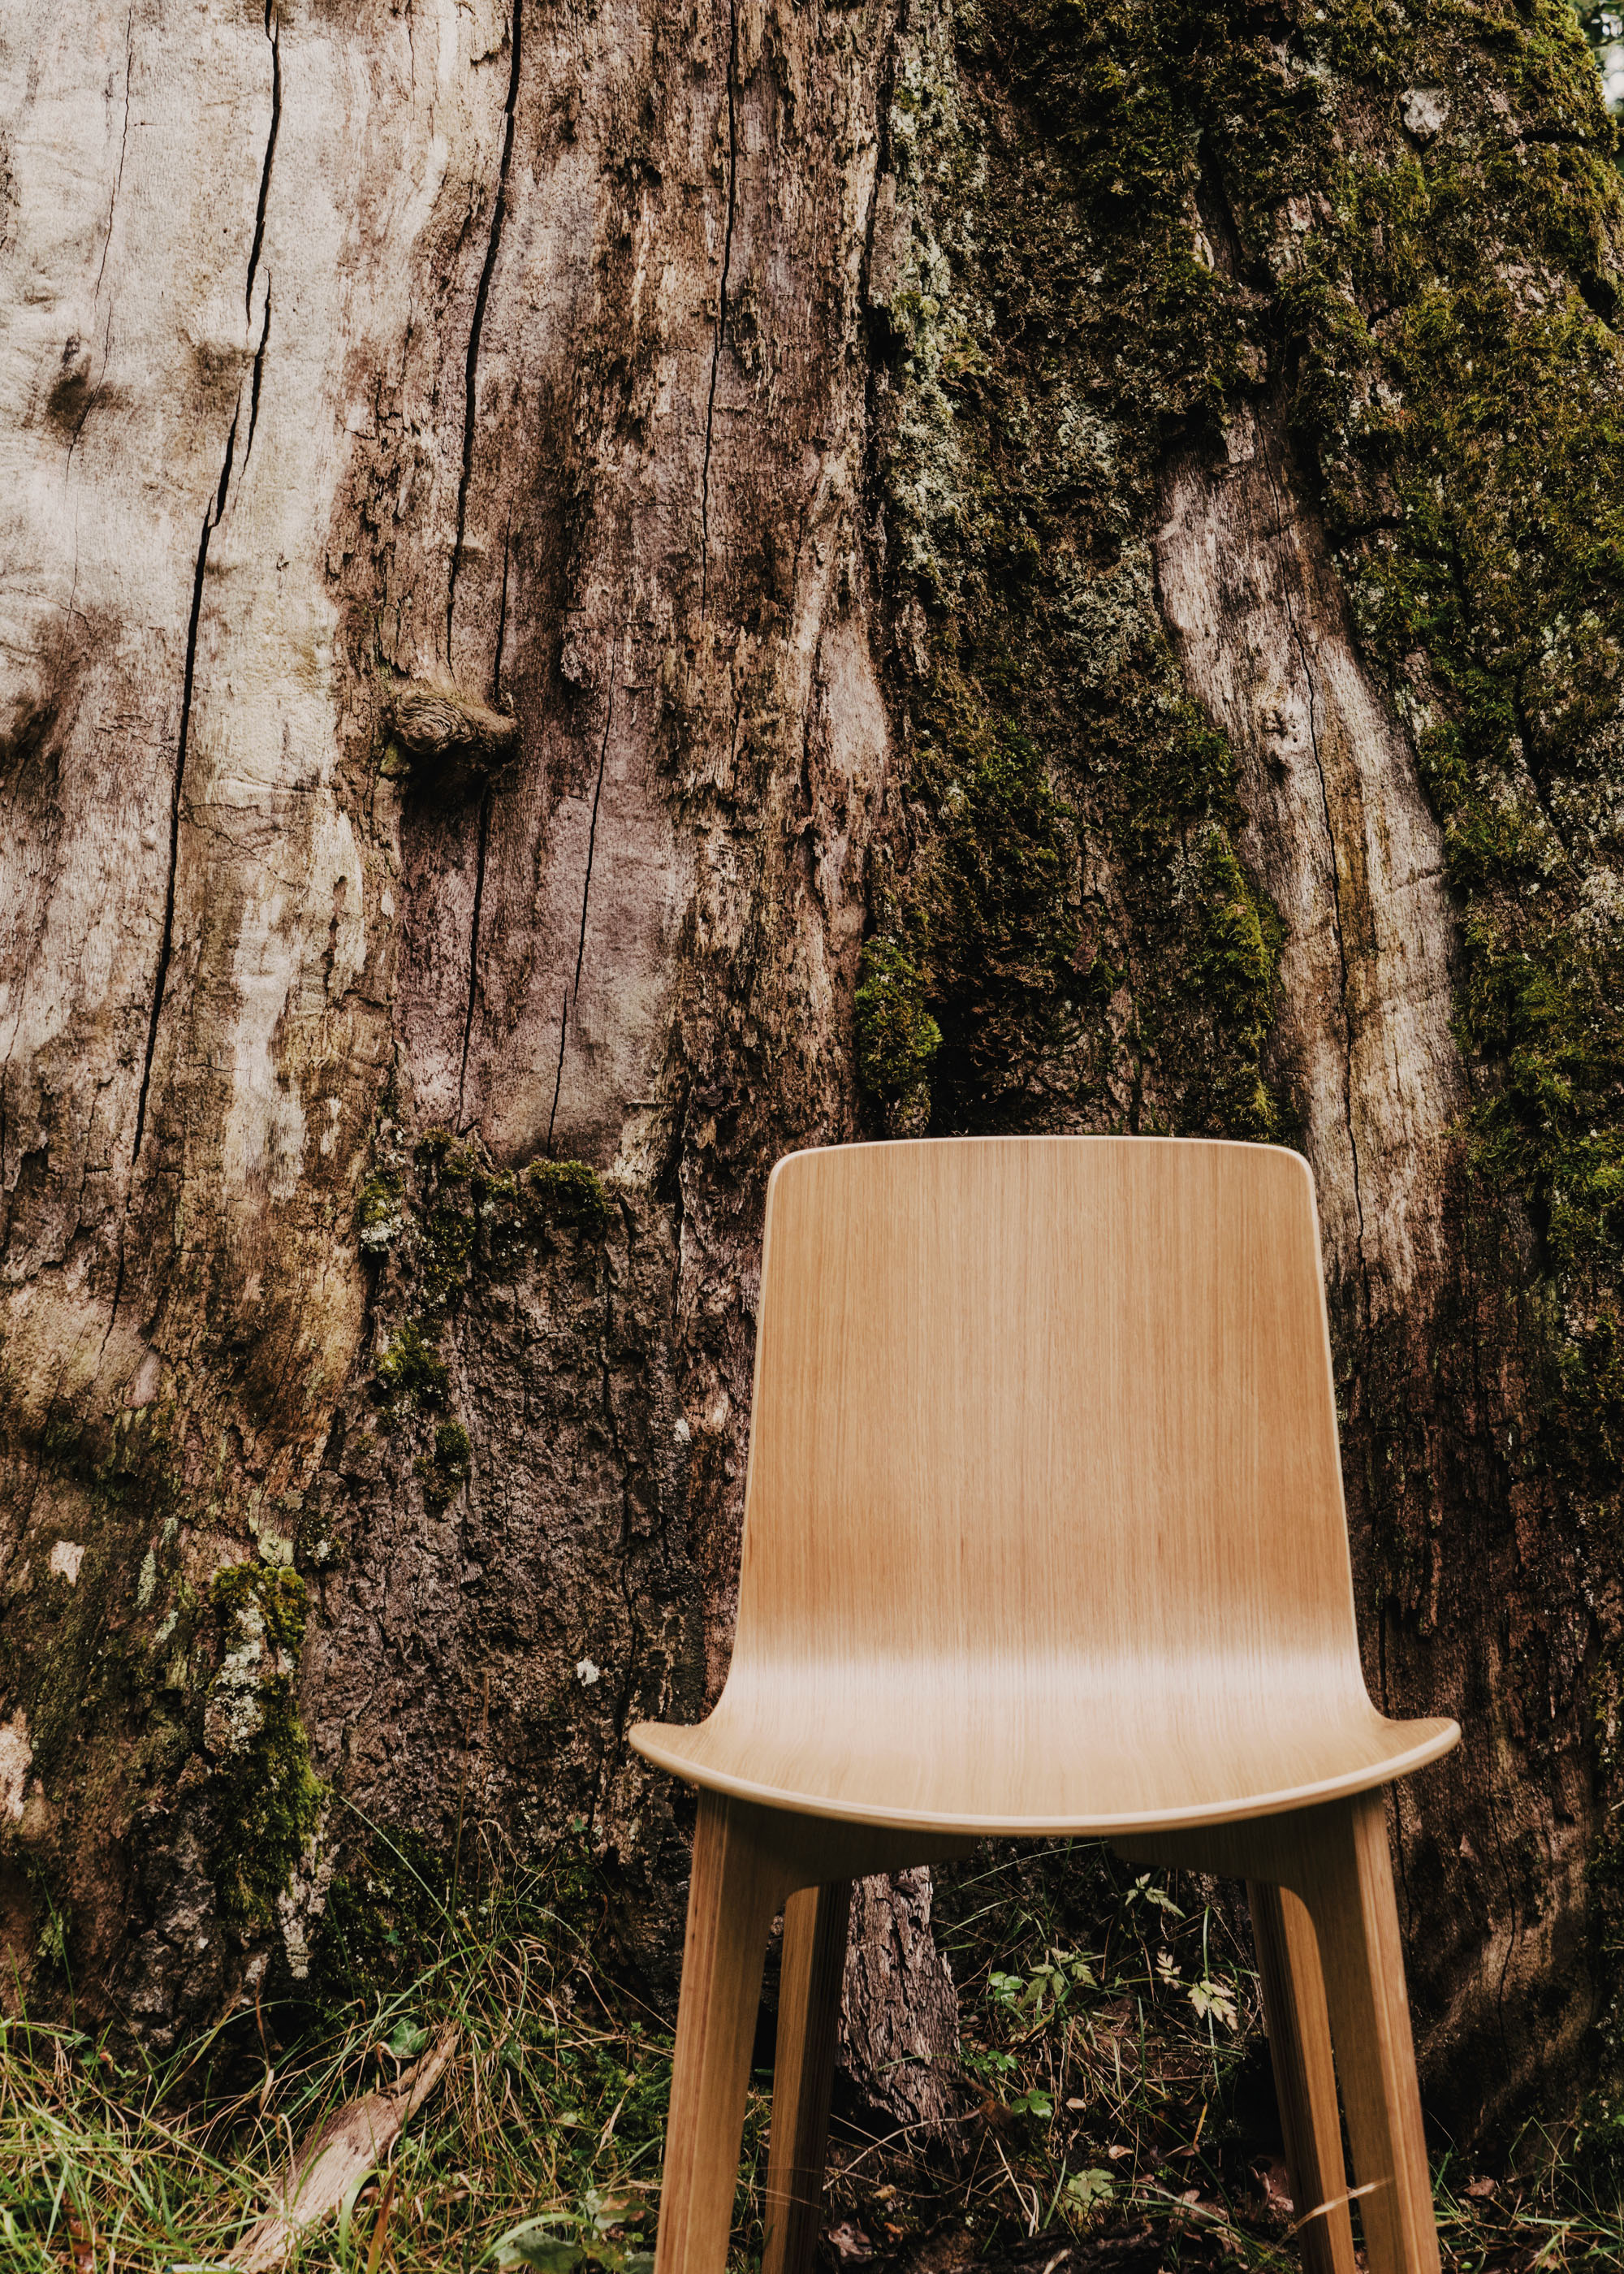 #furniture #enea #design #chairs #clase #basque #wood